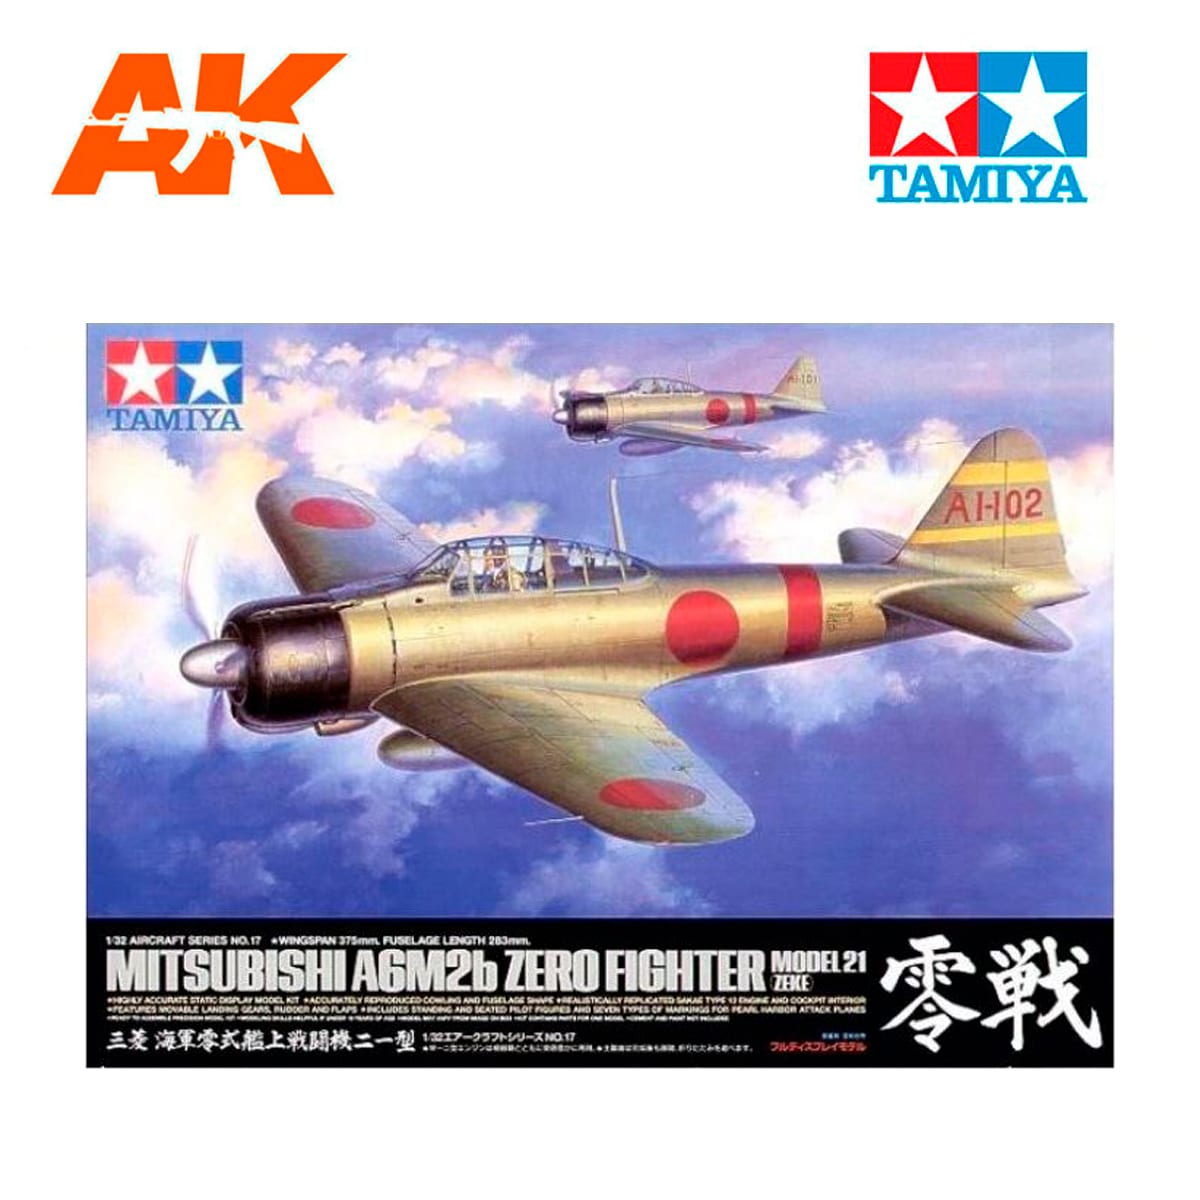 1/32 Mitsubishi A6M2b Zero fighter Model 21 zeke